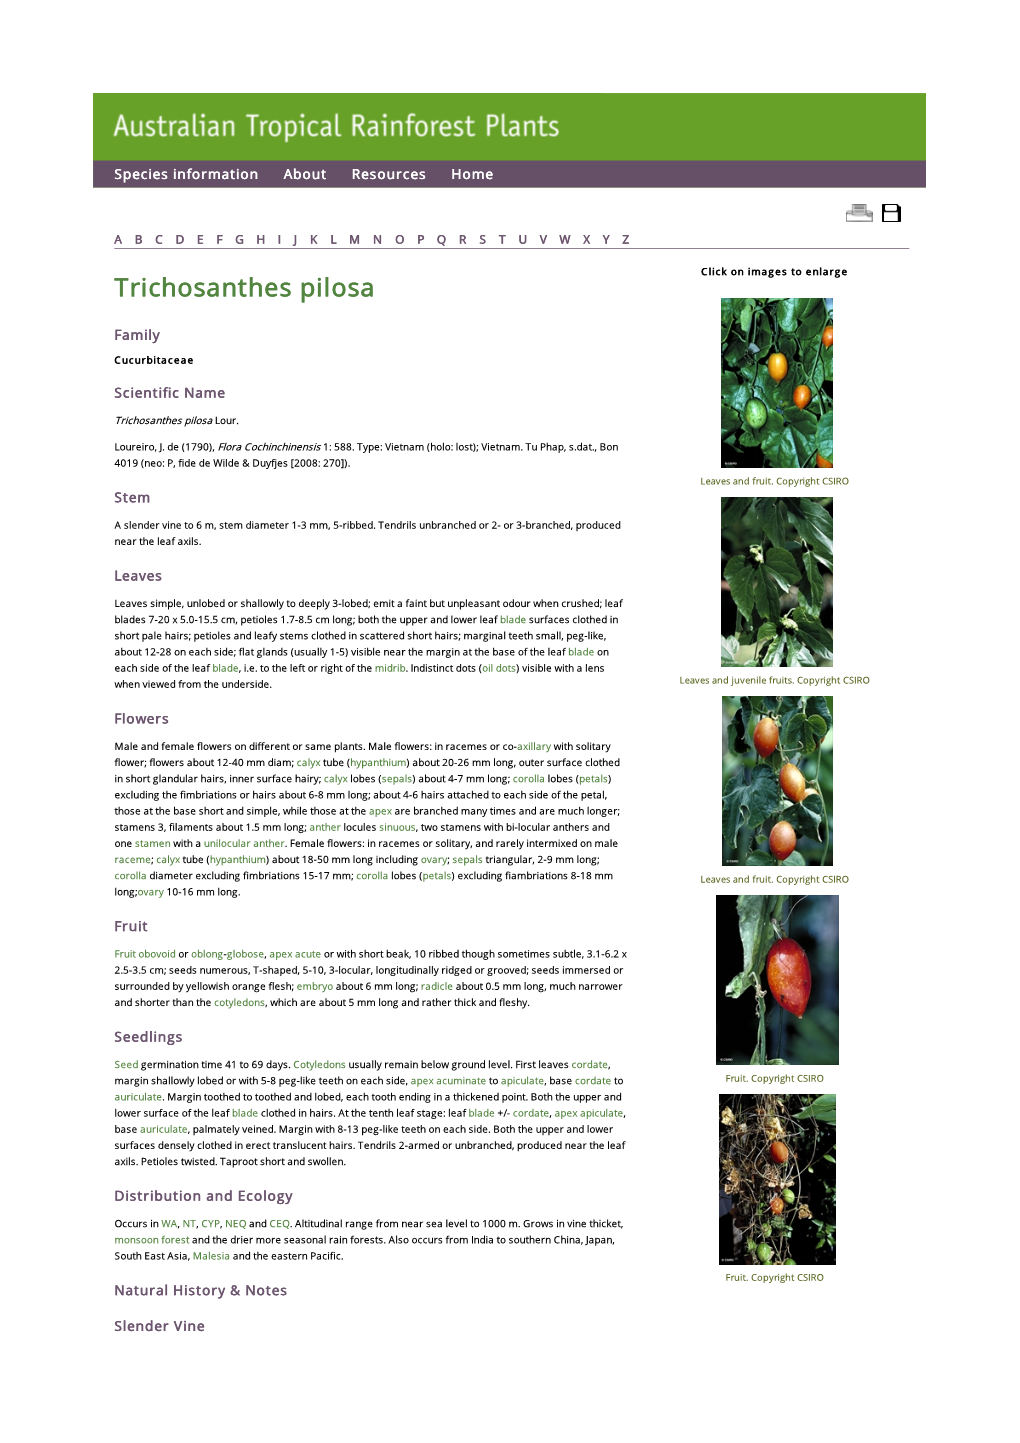 Trichosanthes Pilosa Click on Images to Enlarge